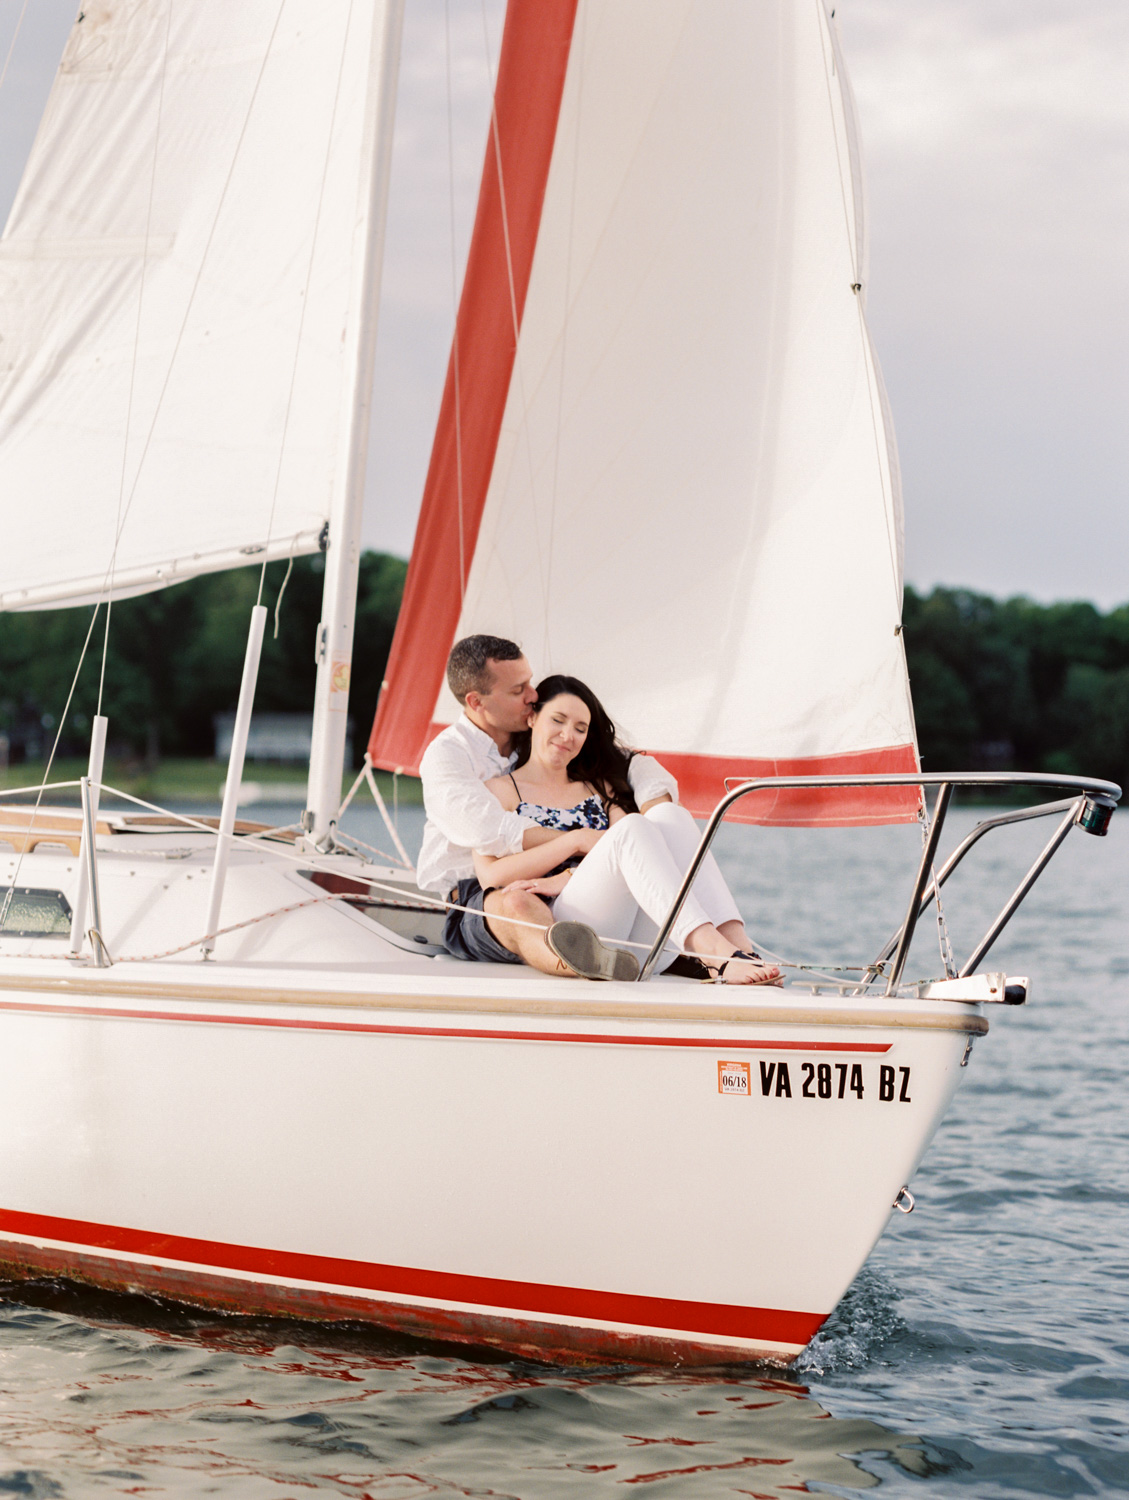 Megan & Court | Sailboat Engagement Photos | Smith Mountain Lake, Virginia | Kelsey & Nate | kelseyandnate.com | Nautical Photography